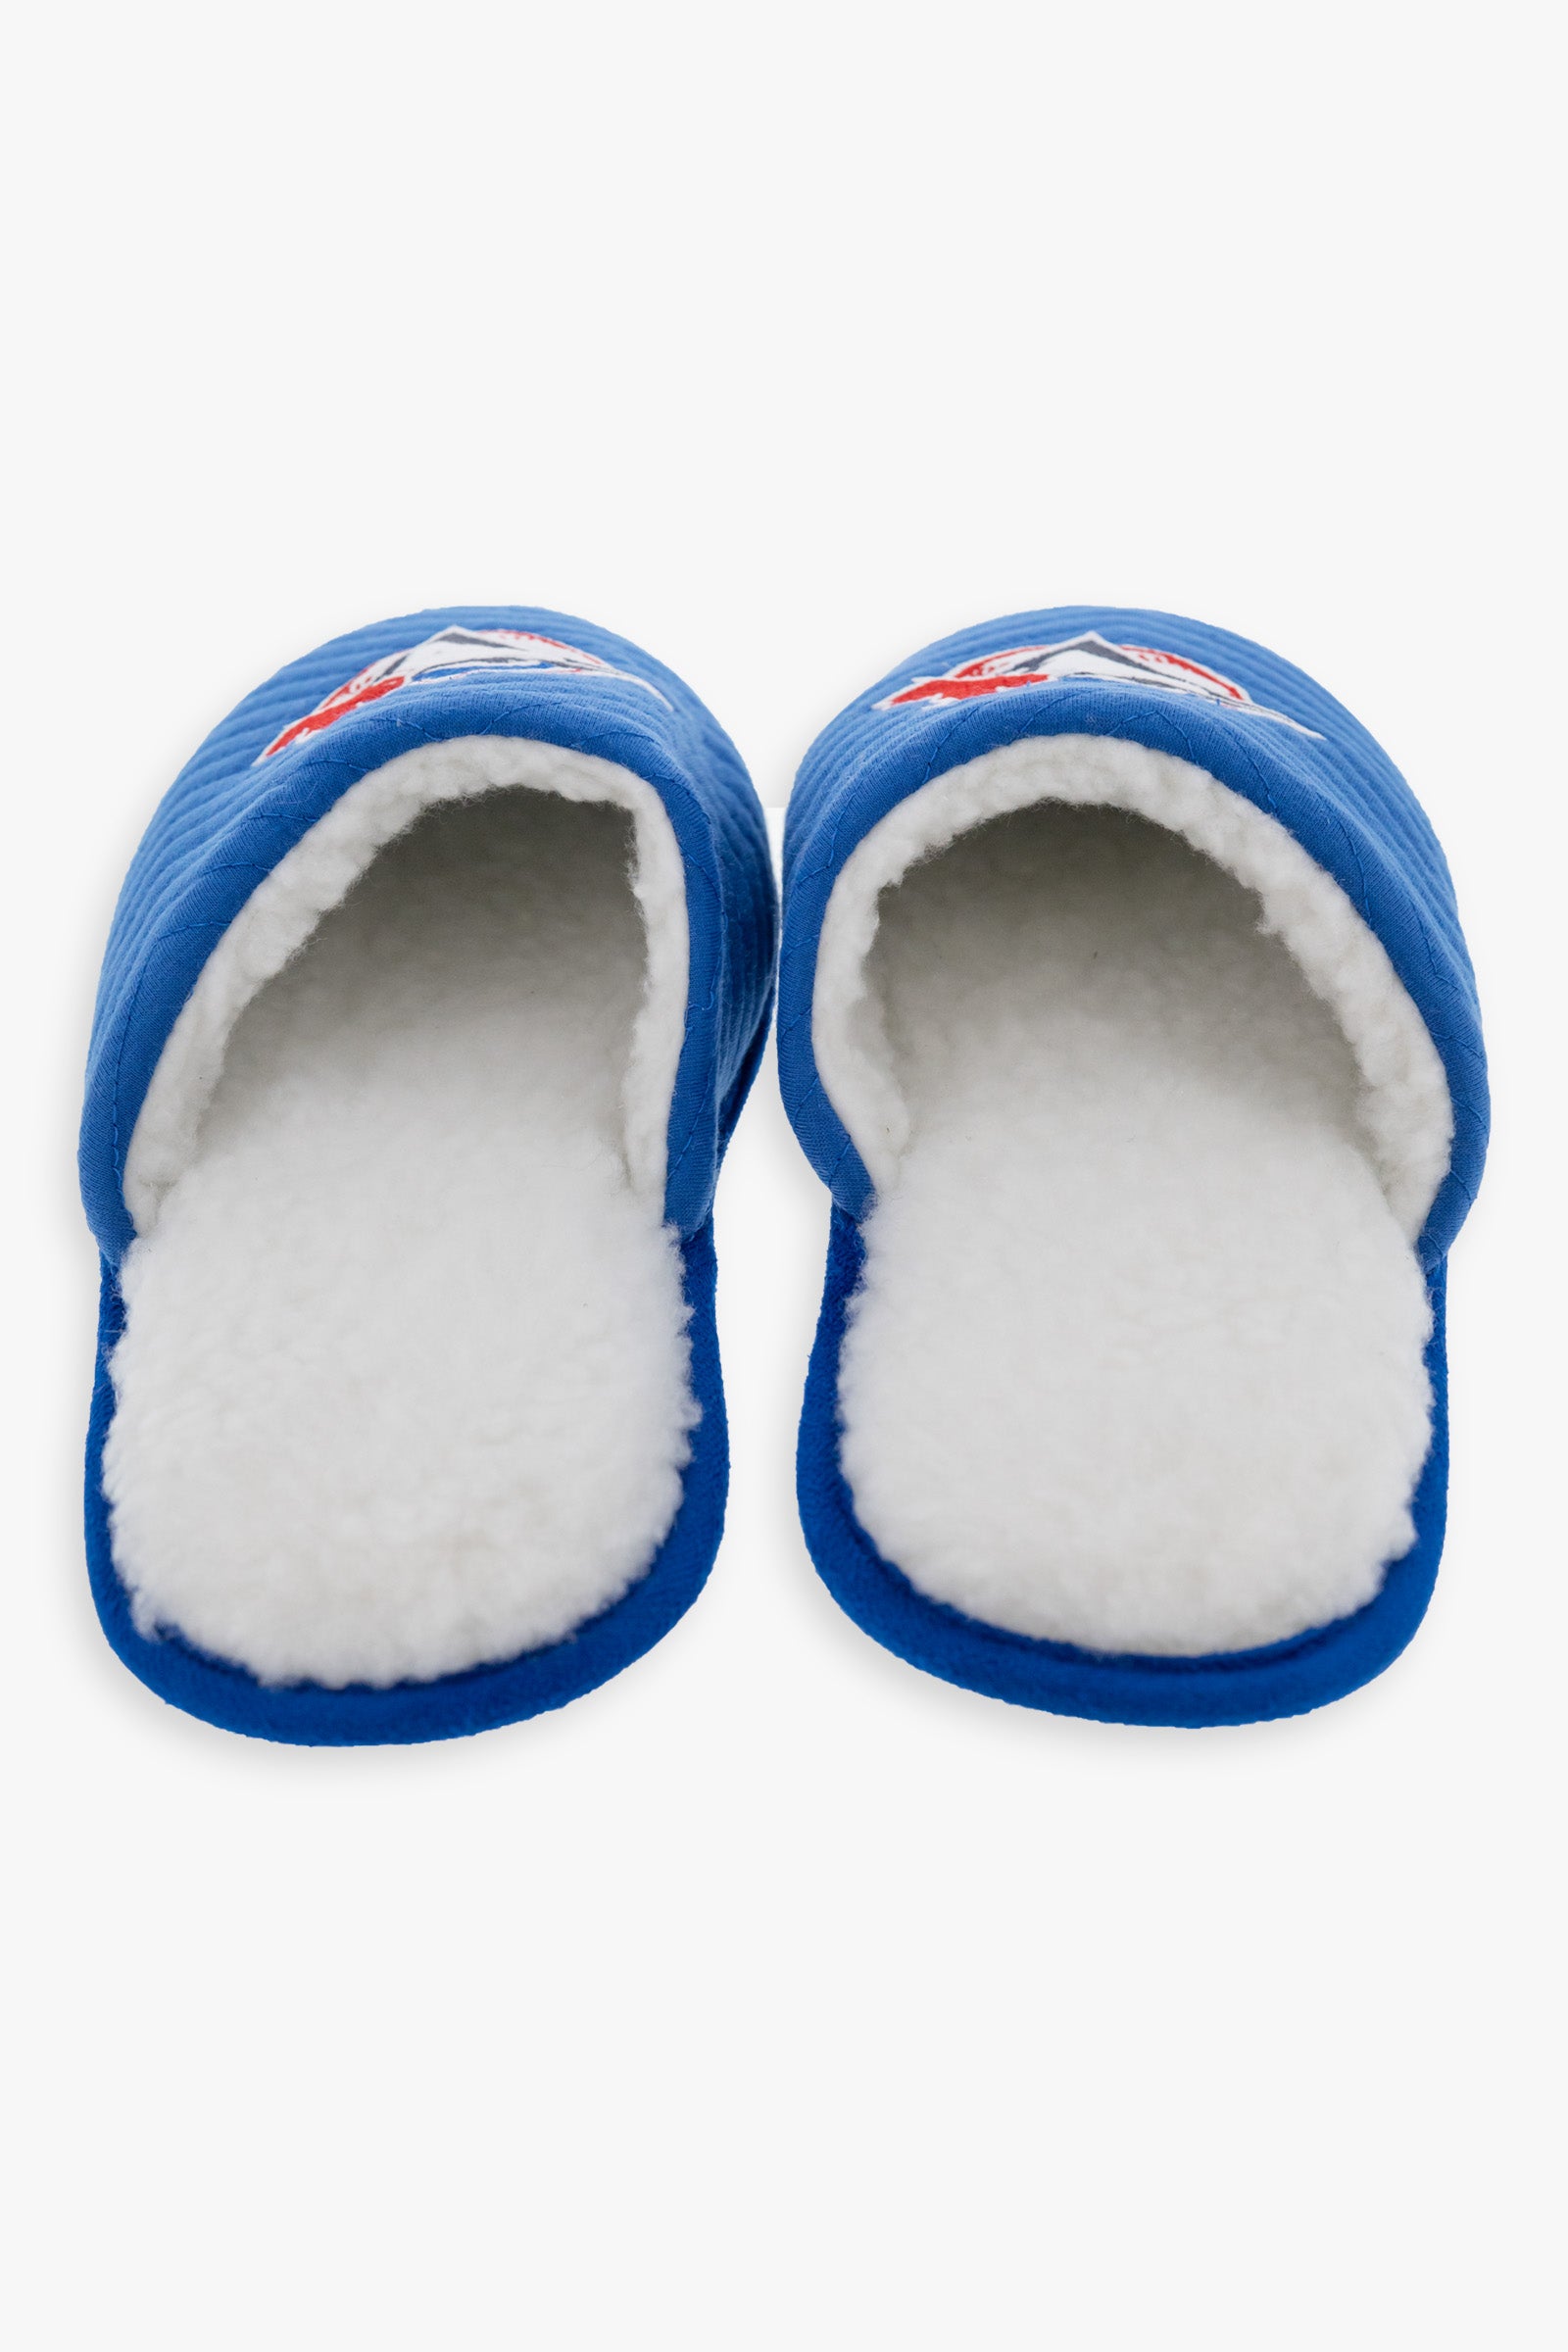 Gertex MLB Toronto Blue Jays Men's Winter Fuzzy Home Slippers